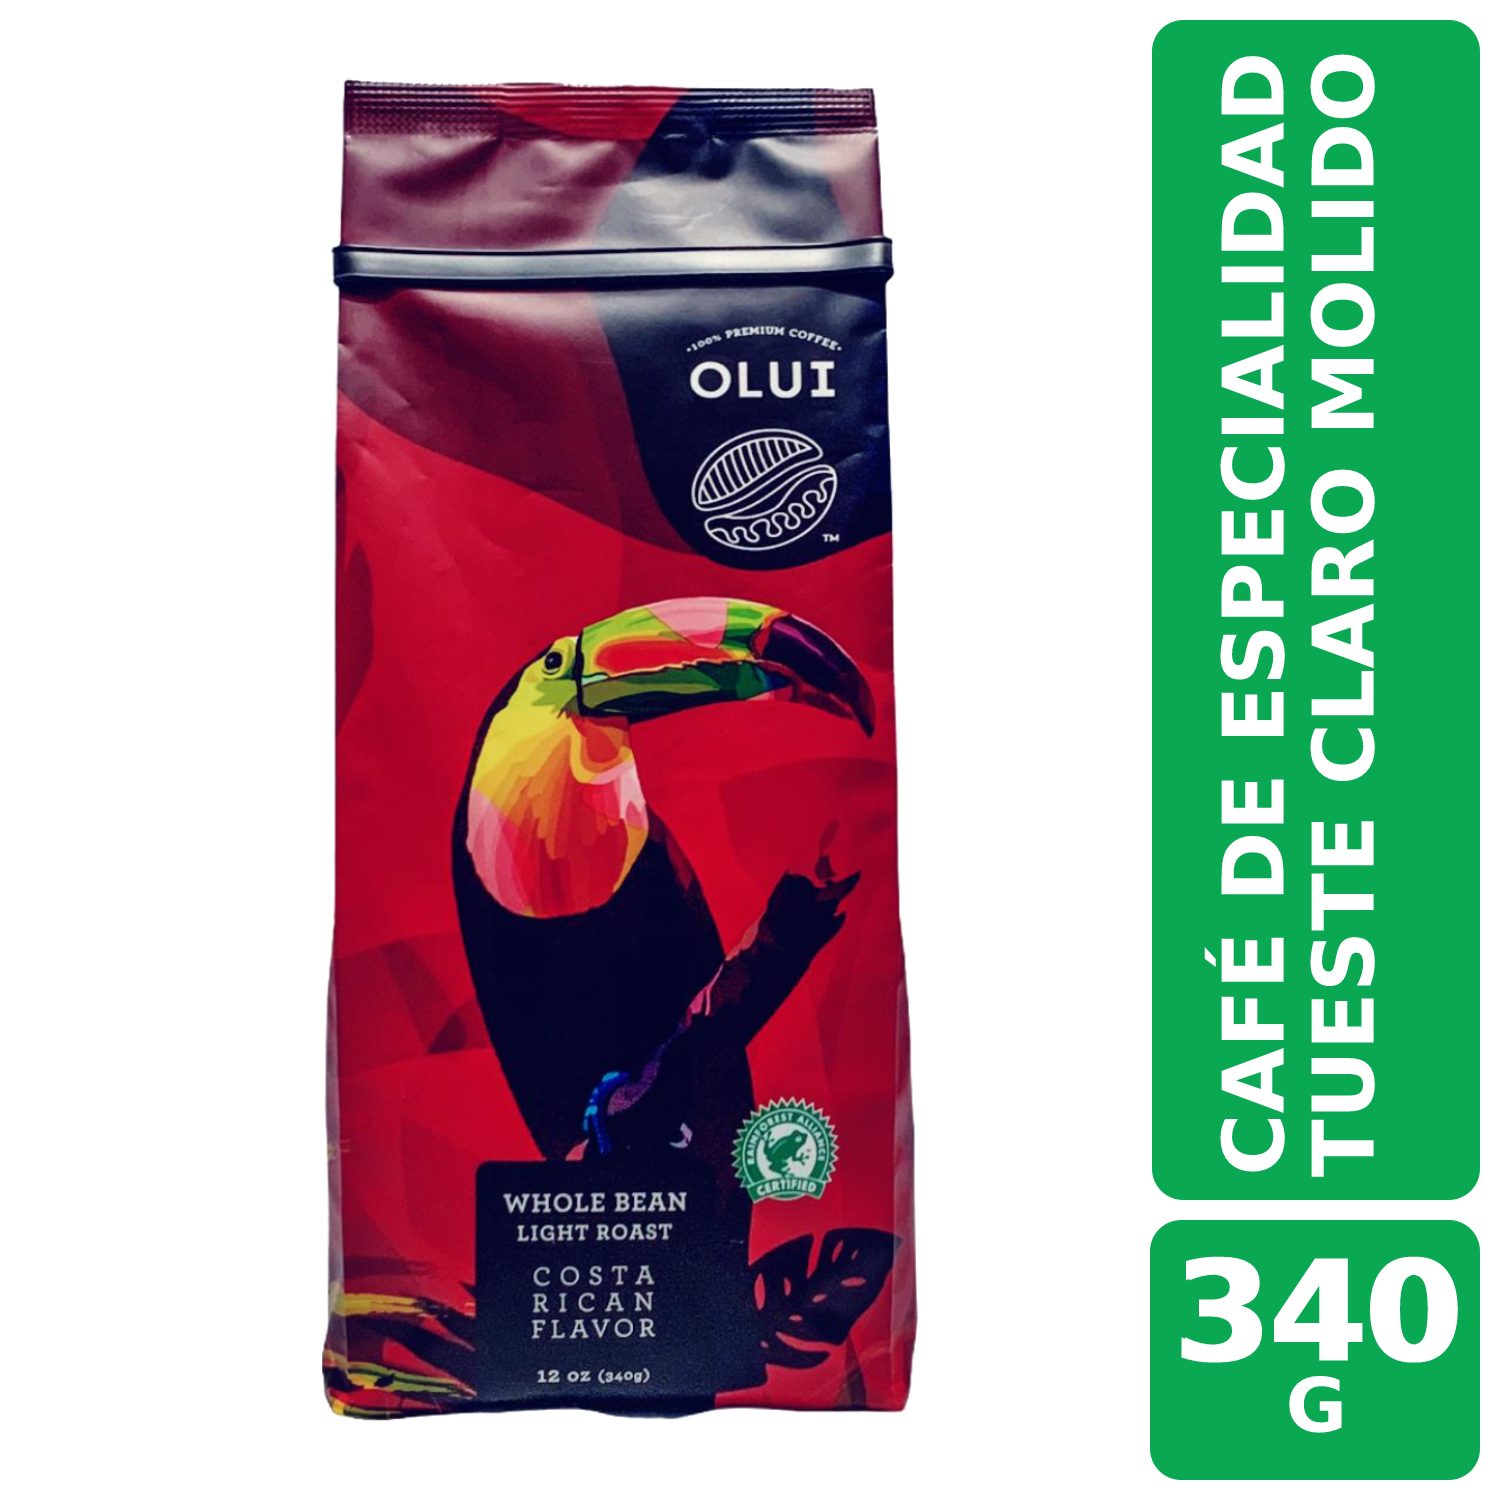 CAFÉ MOLIDO GOURMET TUESTE CLARO OLUI paquete 340 g
